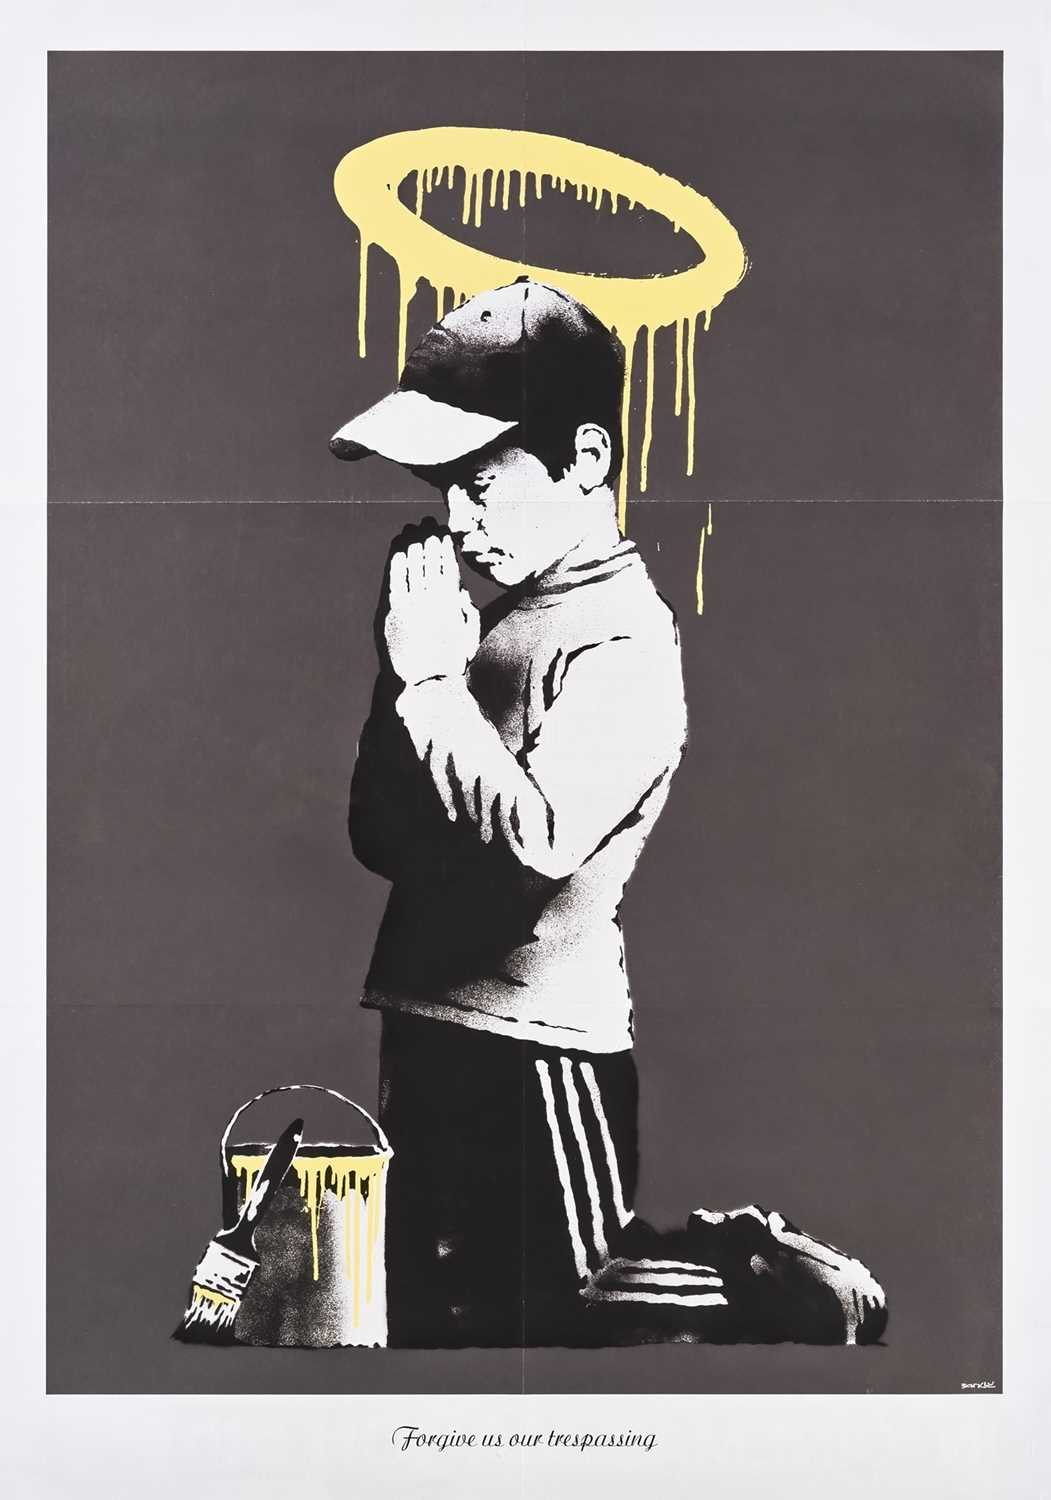 Lot 80 - Banksy (British 1974-), ‘Forgive Us Our Trespassing’, 2010